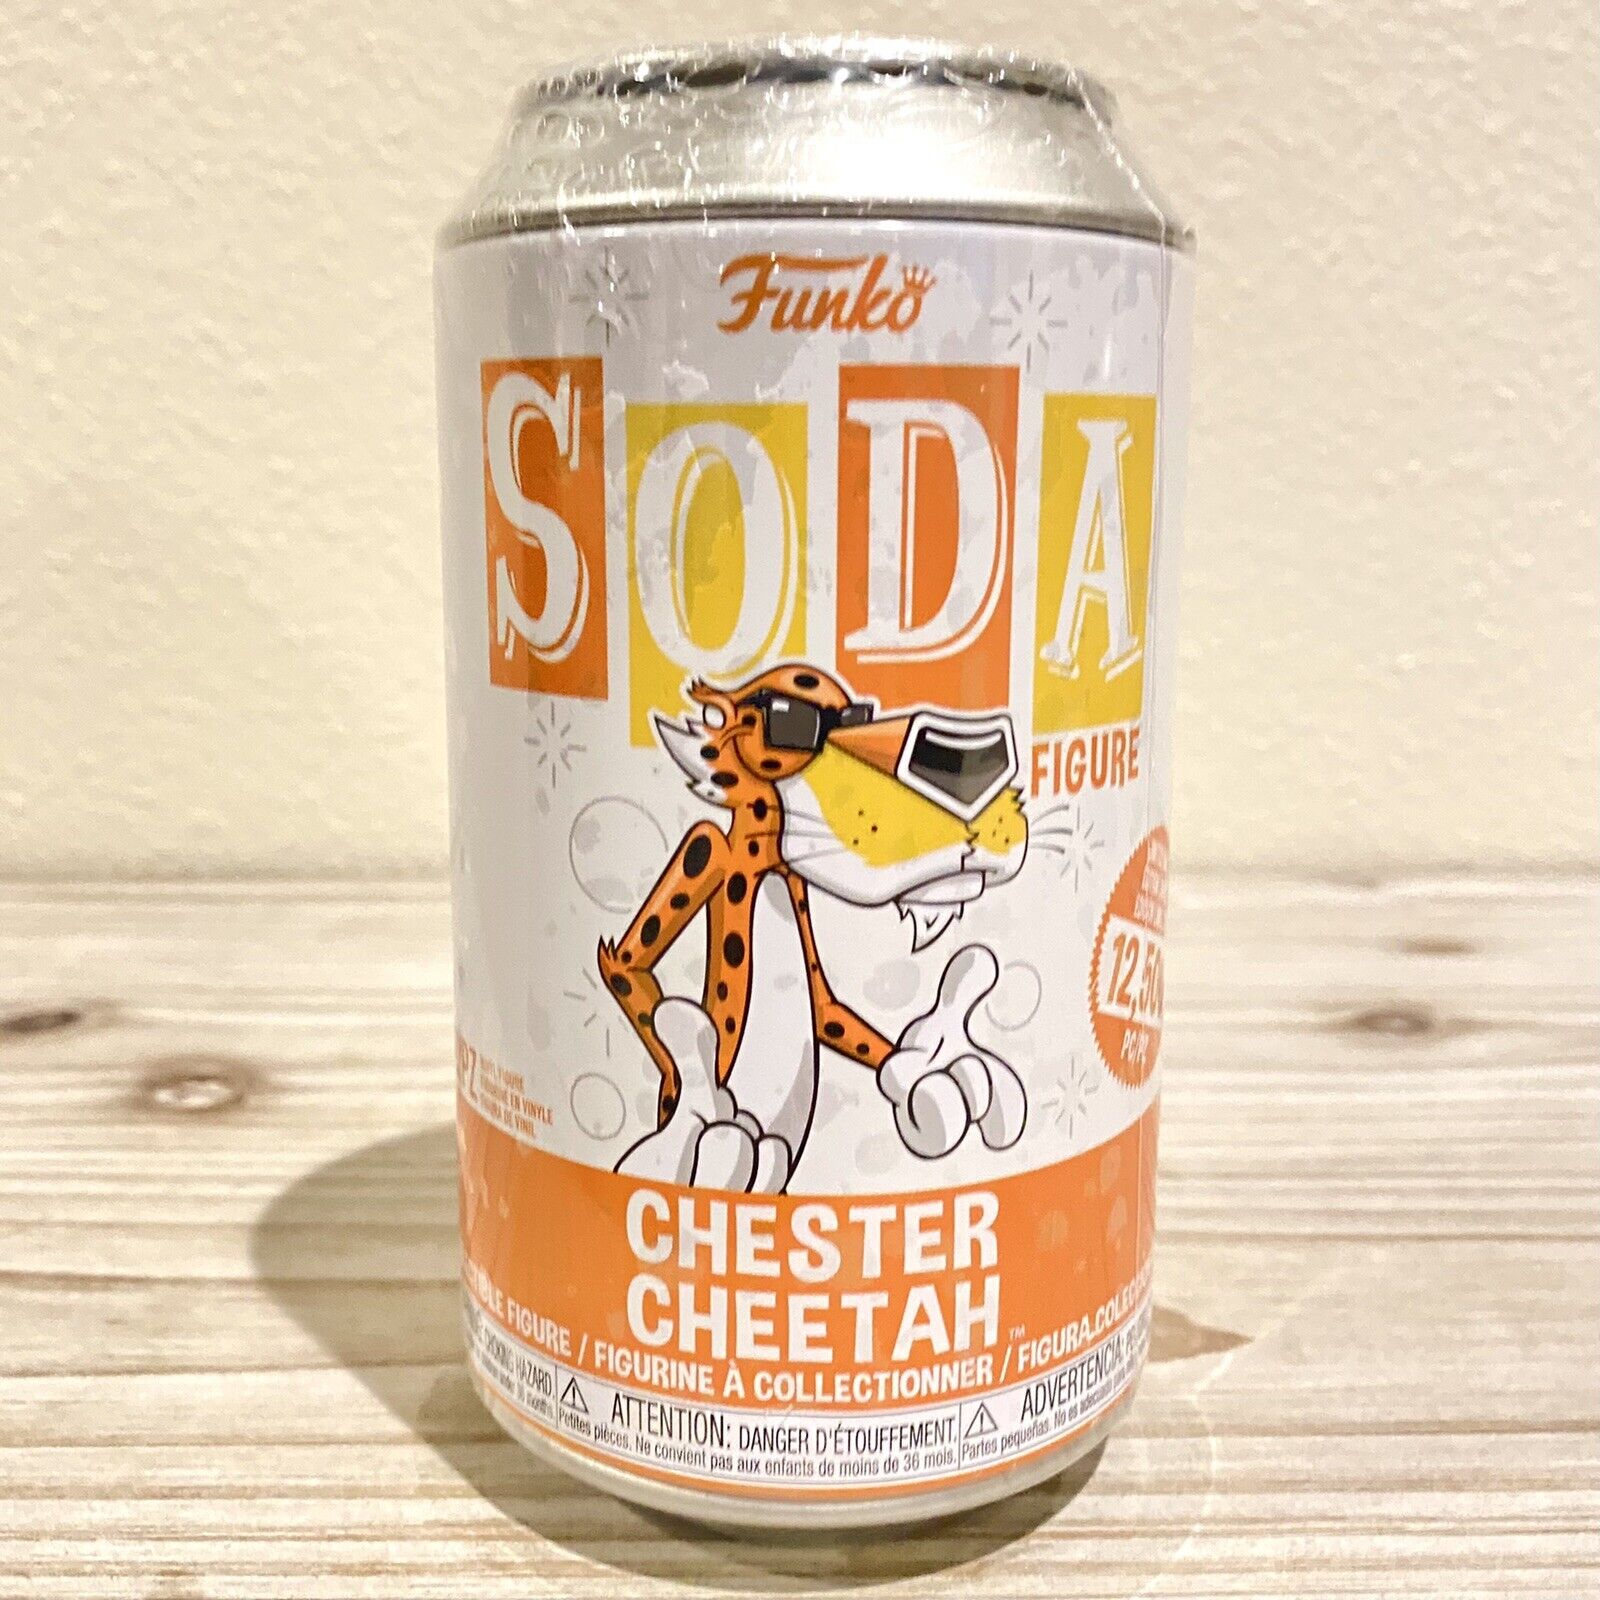 Chester Cheetah Funko Soda - SEALED - (Chance At Chase) 🔥